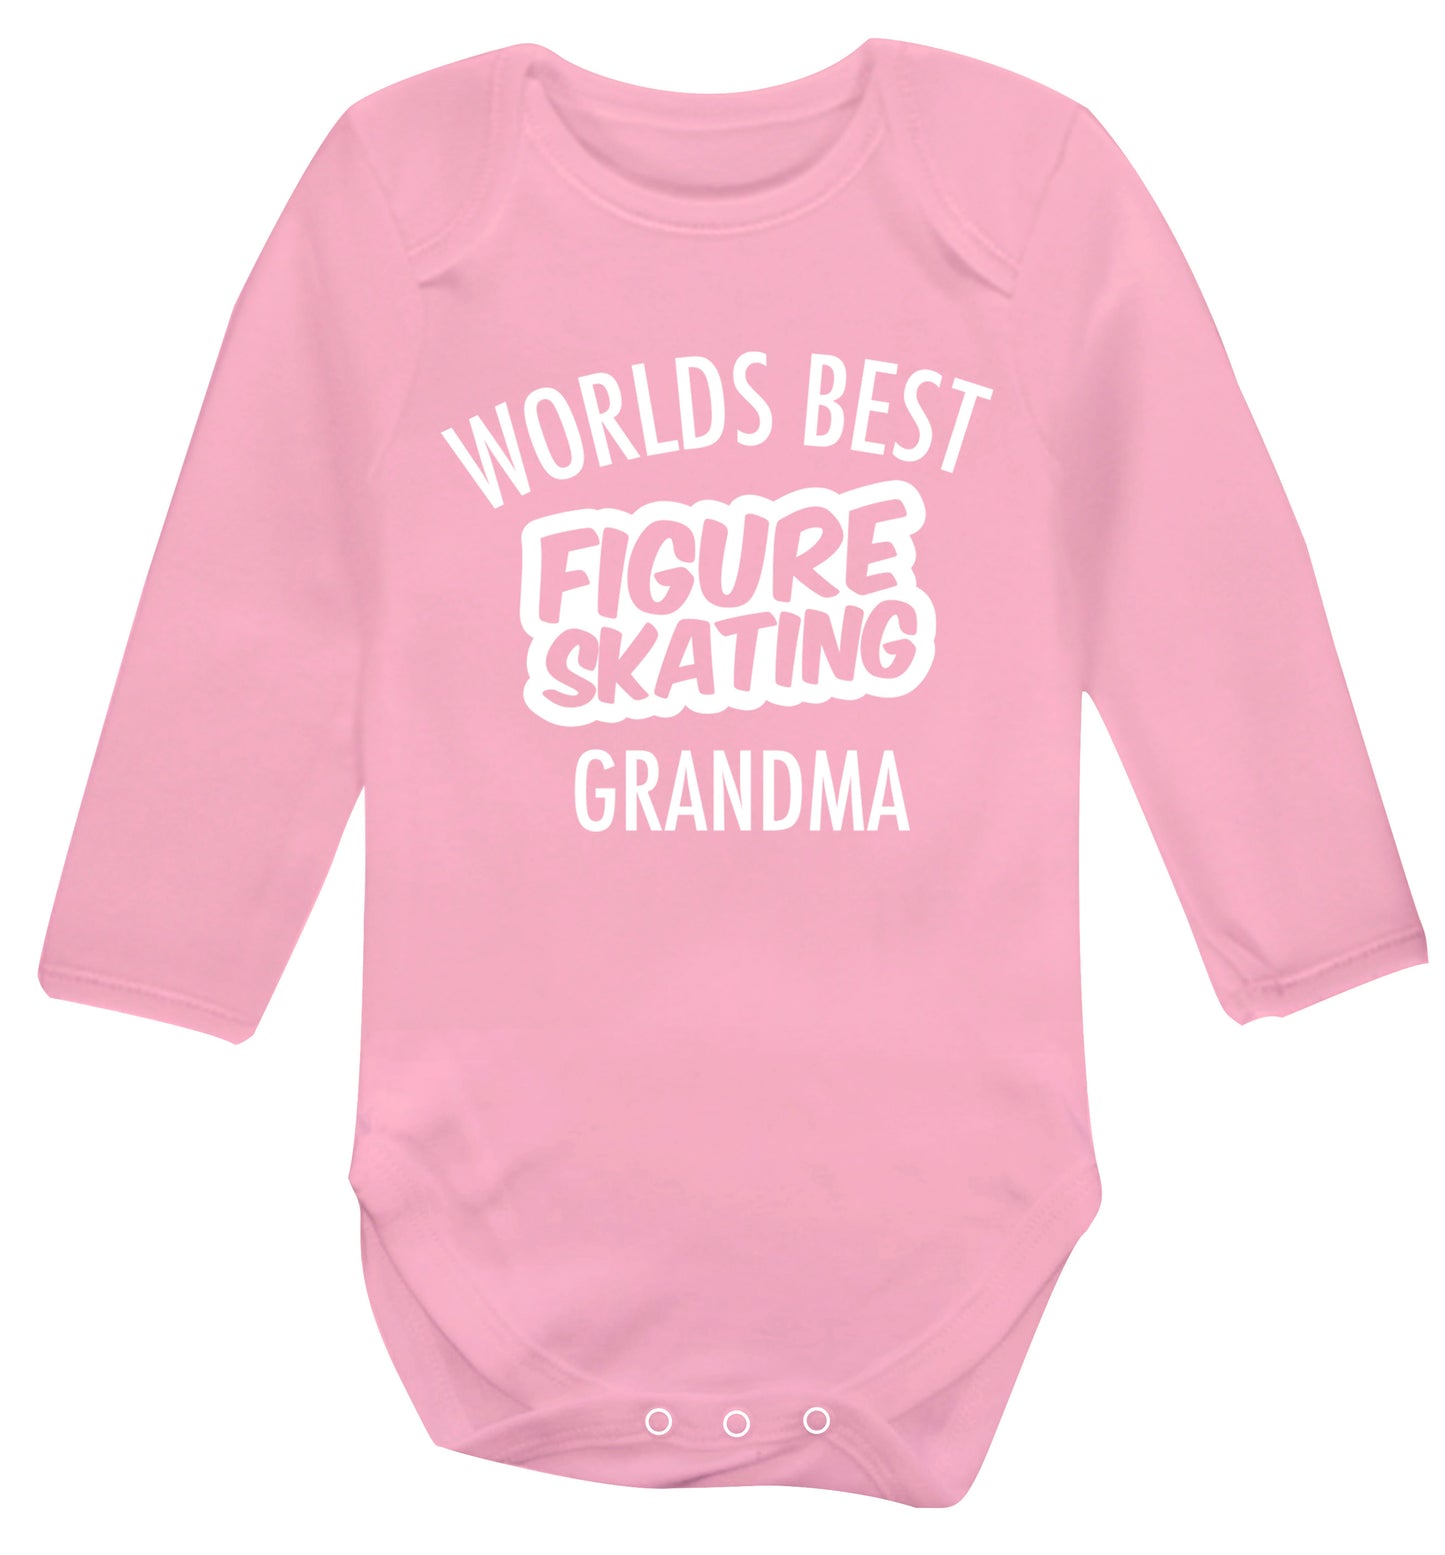 Worlds best figure skating grandma Baby Vest long sleeved pale pink 6-12 months